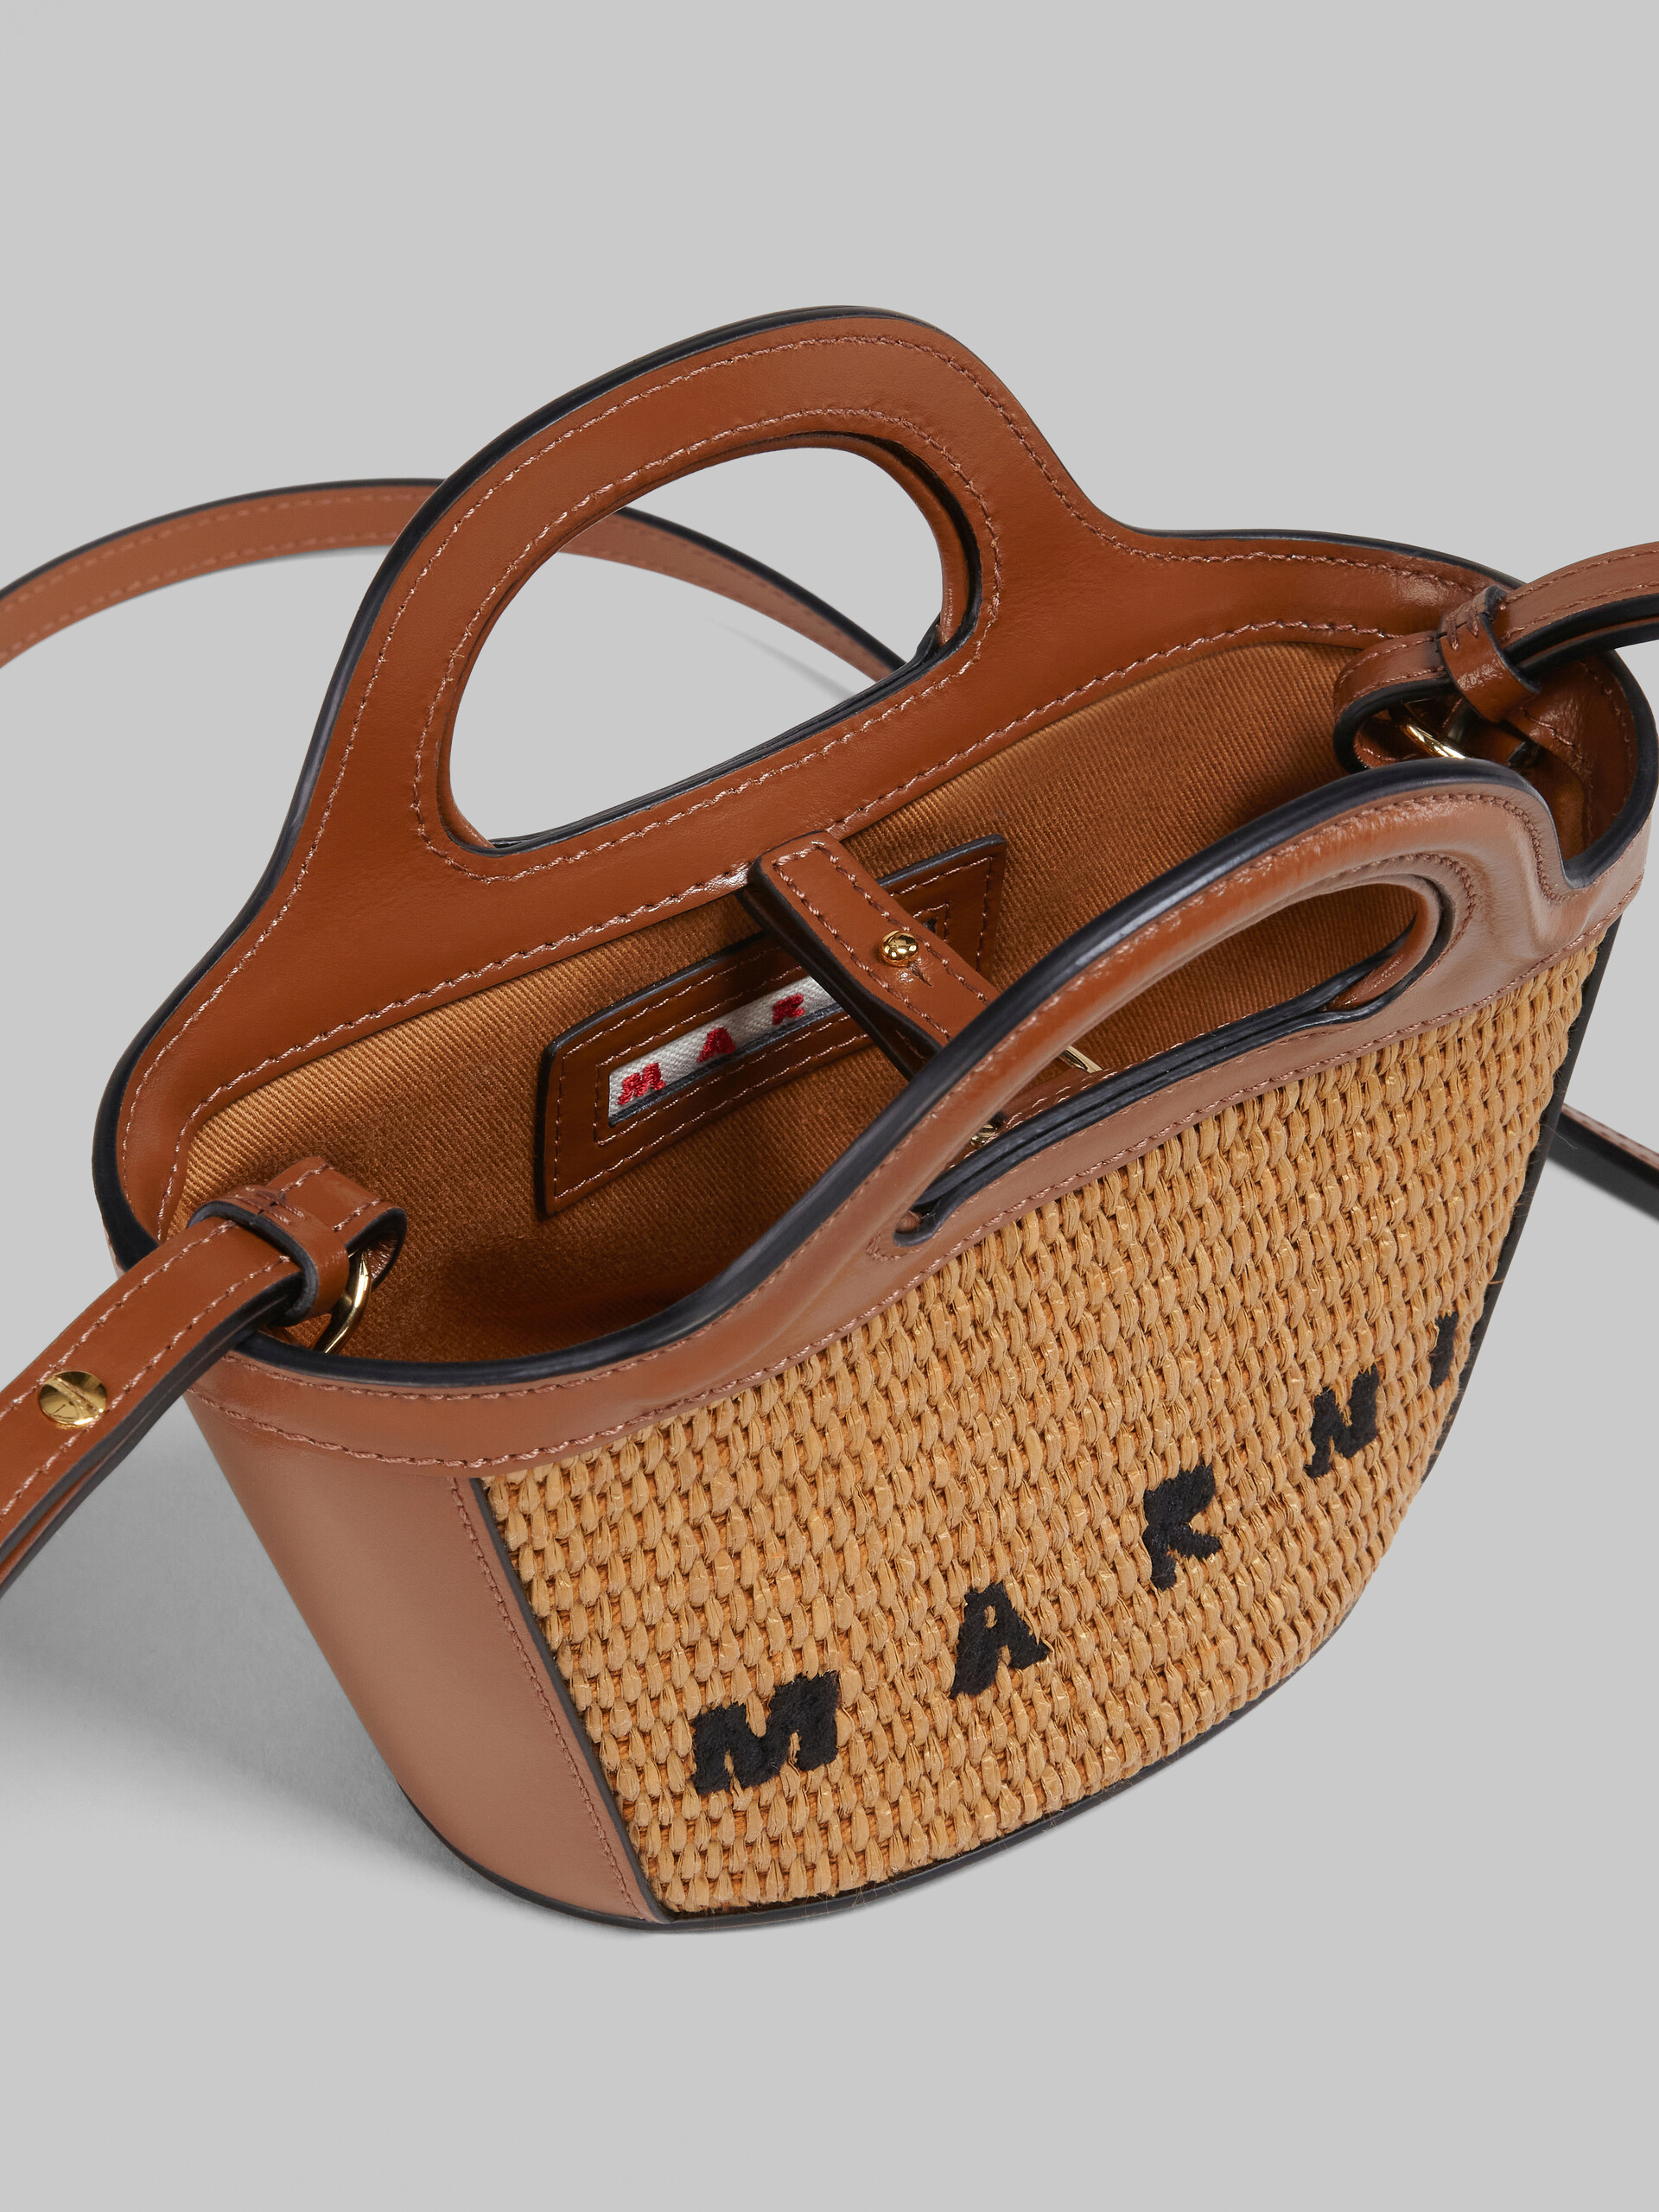 Tropicalia Micro Bag in brown leather and raffia - Handbags - Image 4